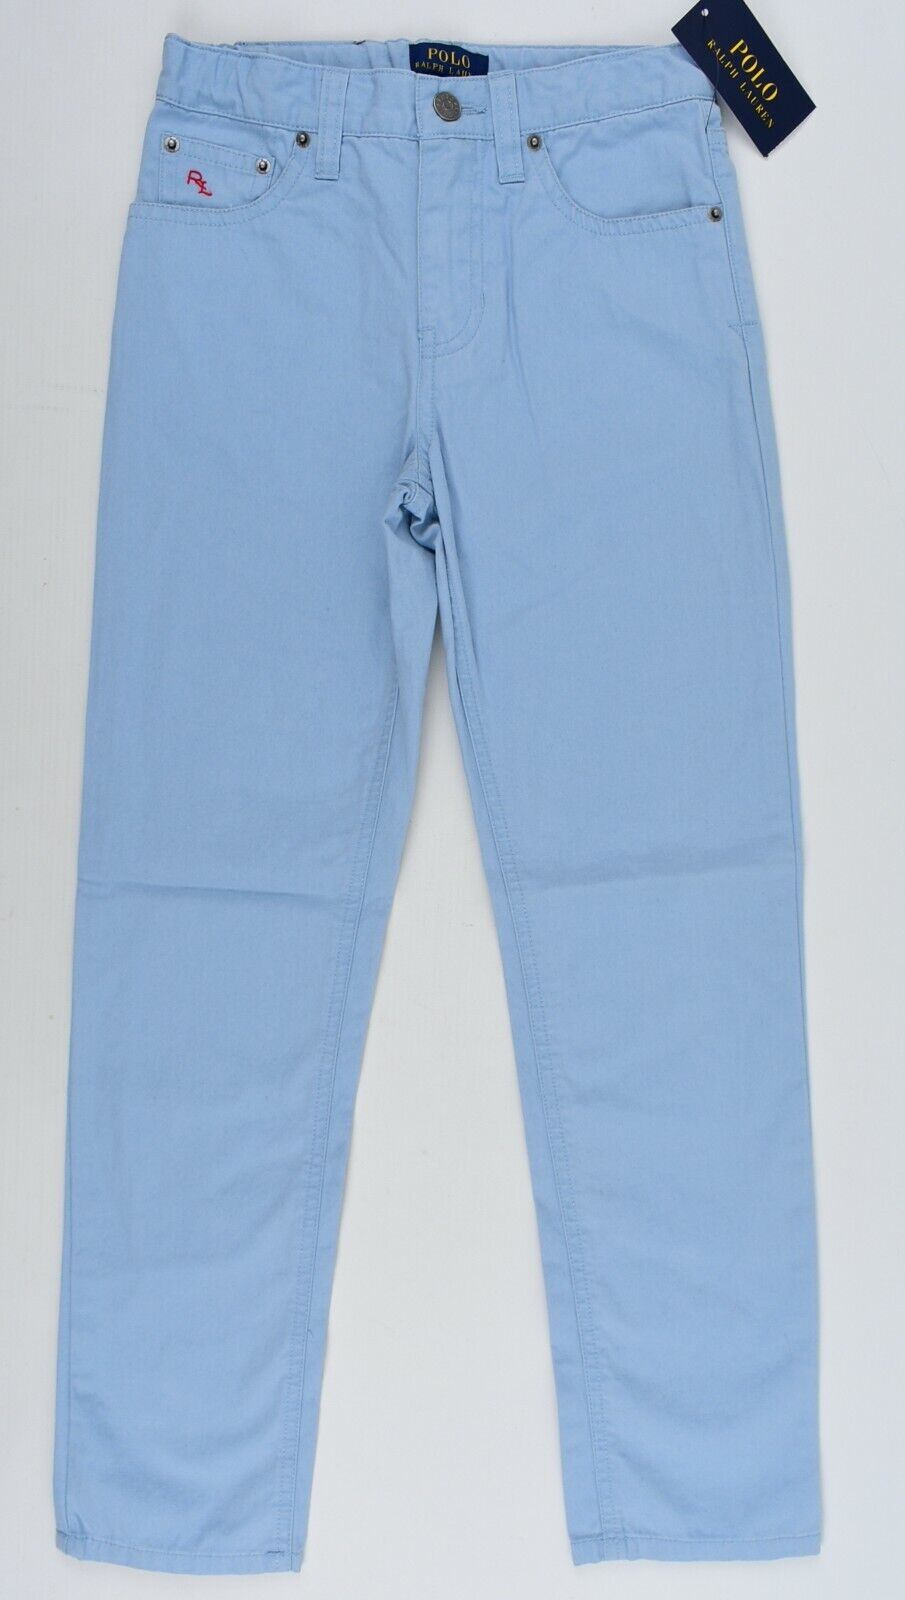 POLO RALPH LAUREN Boys’ Kids’ Cotton Trousers Pants, Blue, size 7 years